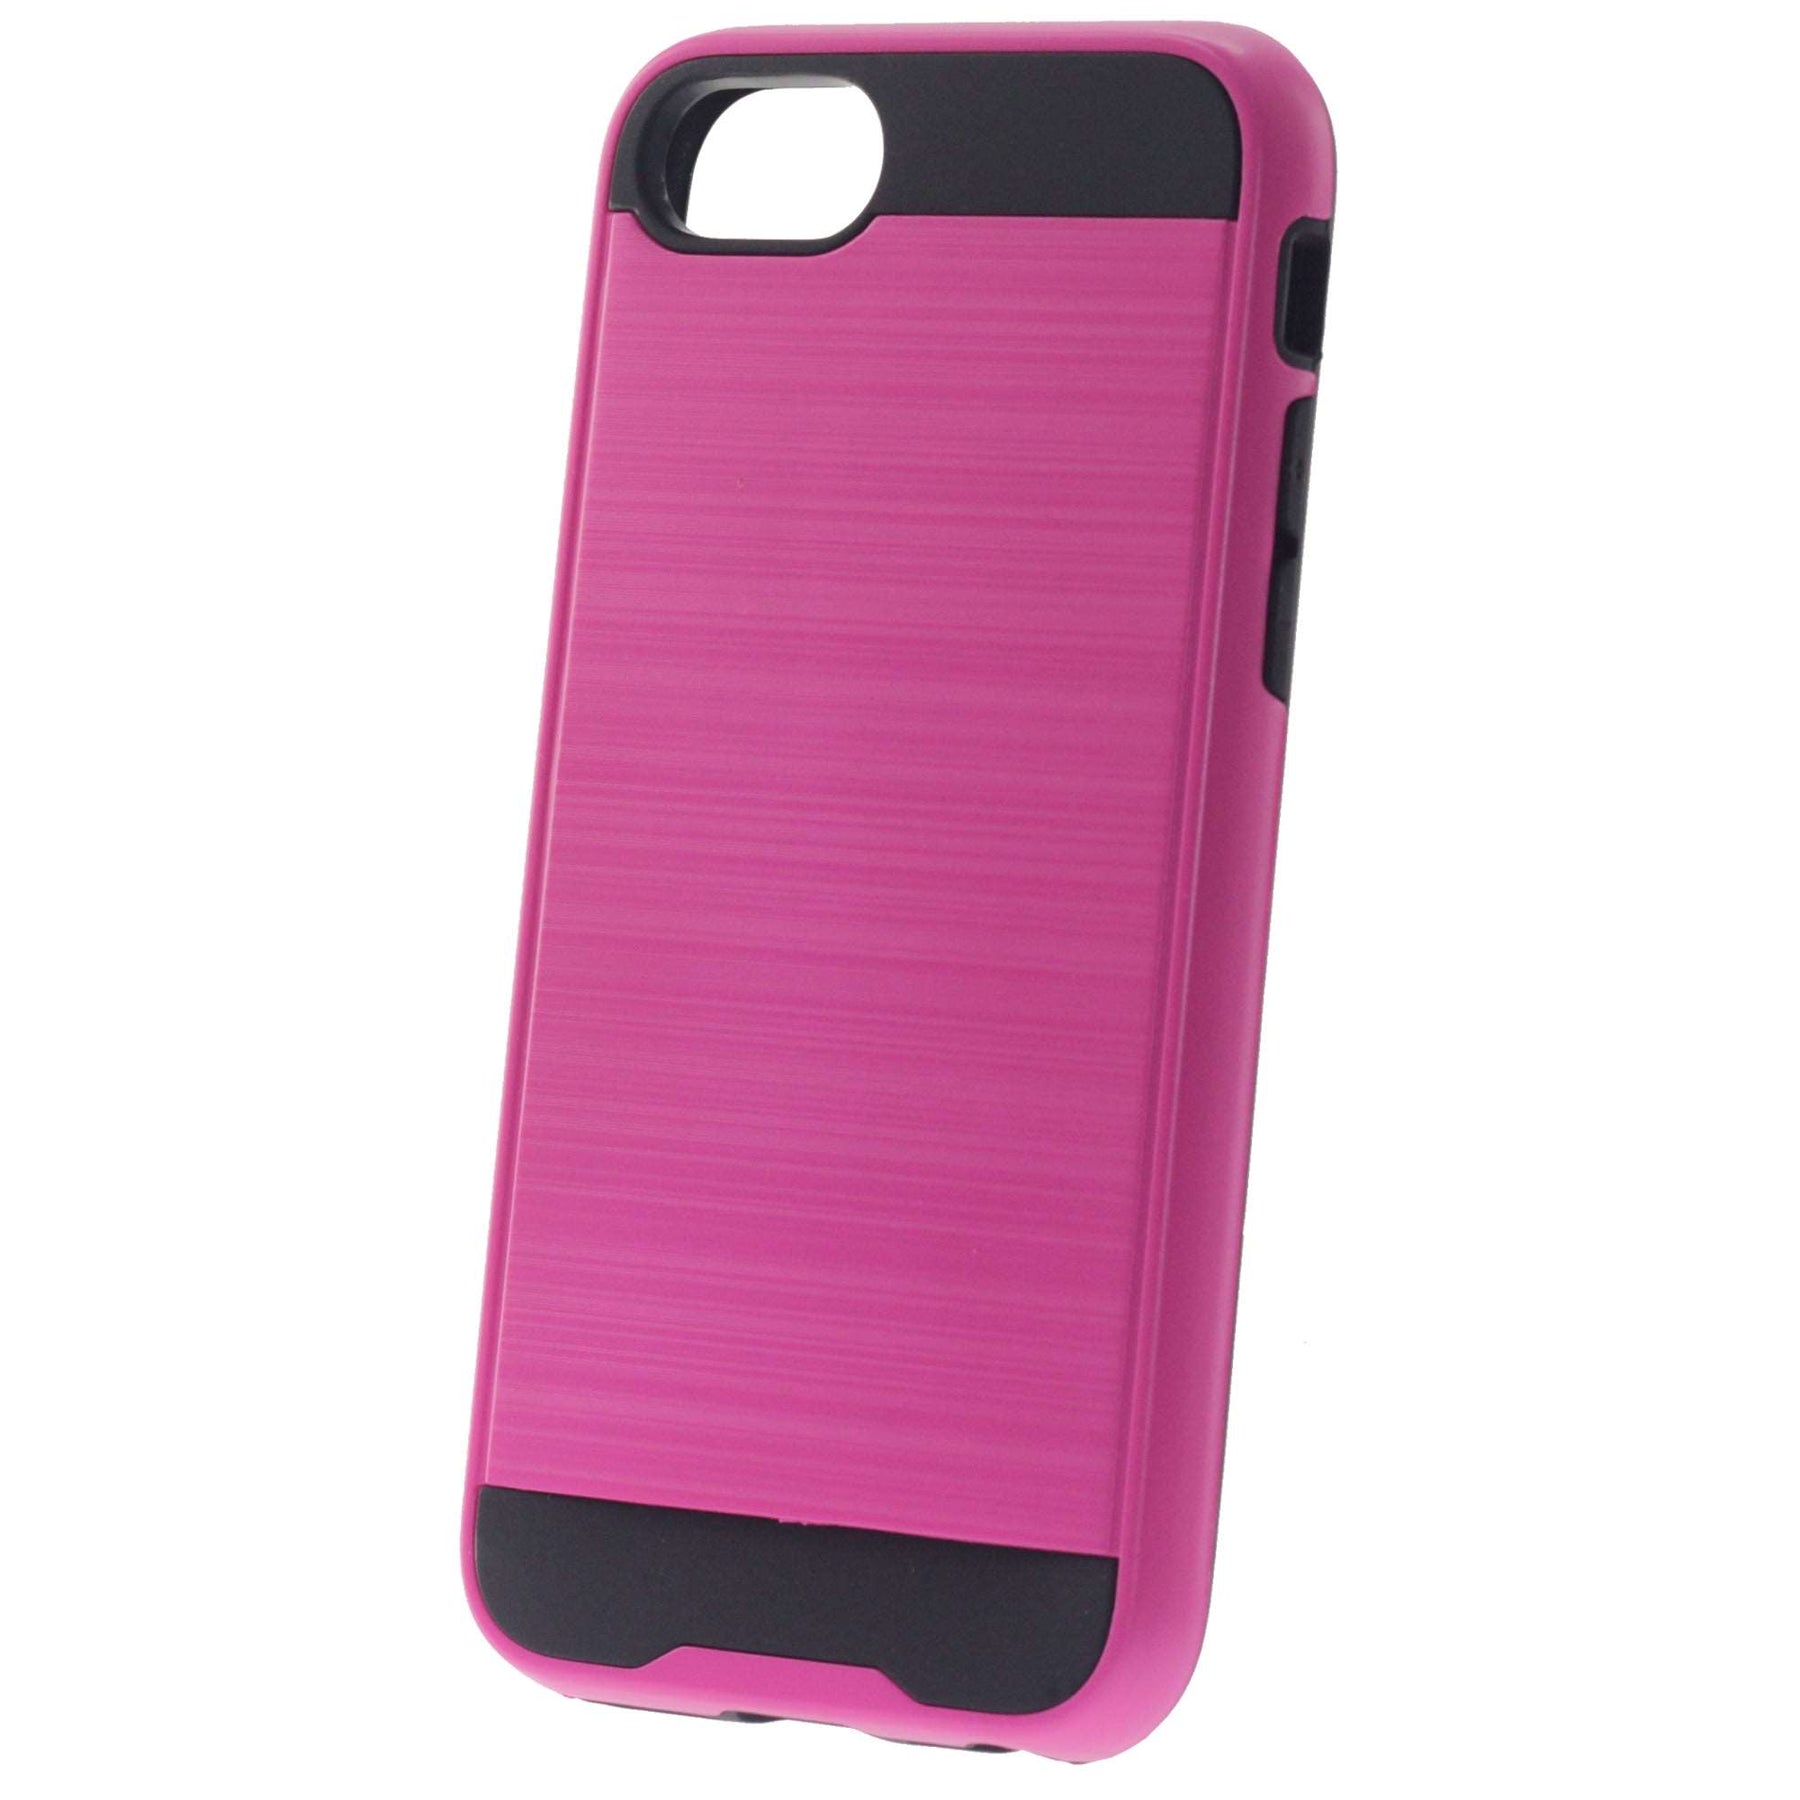 Apple, iPhone 6/6S, Slim Armor Case, Color Pink.